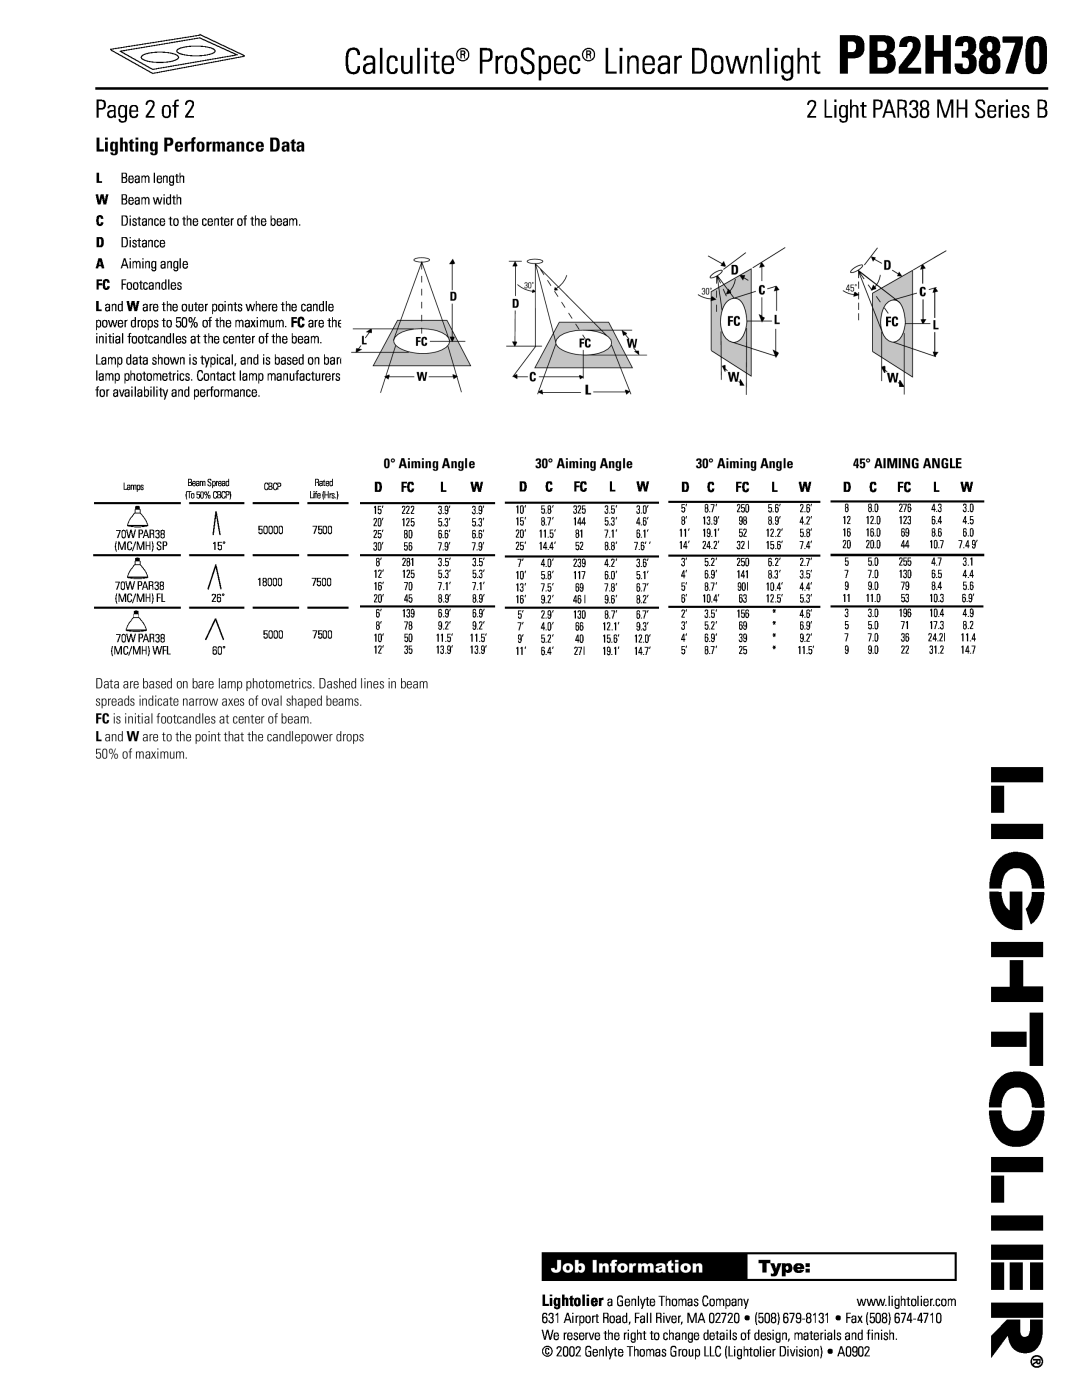 Lightolier Page 2 of, Lighting Performance Data, Calculite ProSpec Linear Downlight PB2H3870, Light PAR38 MH Series B 